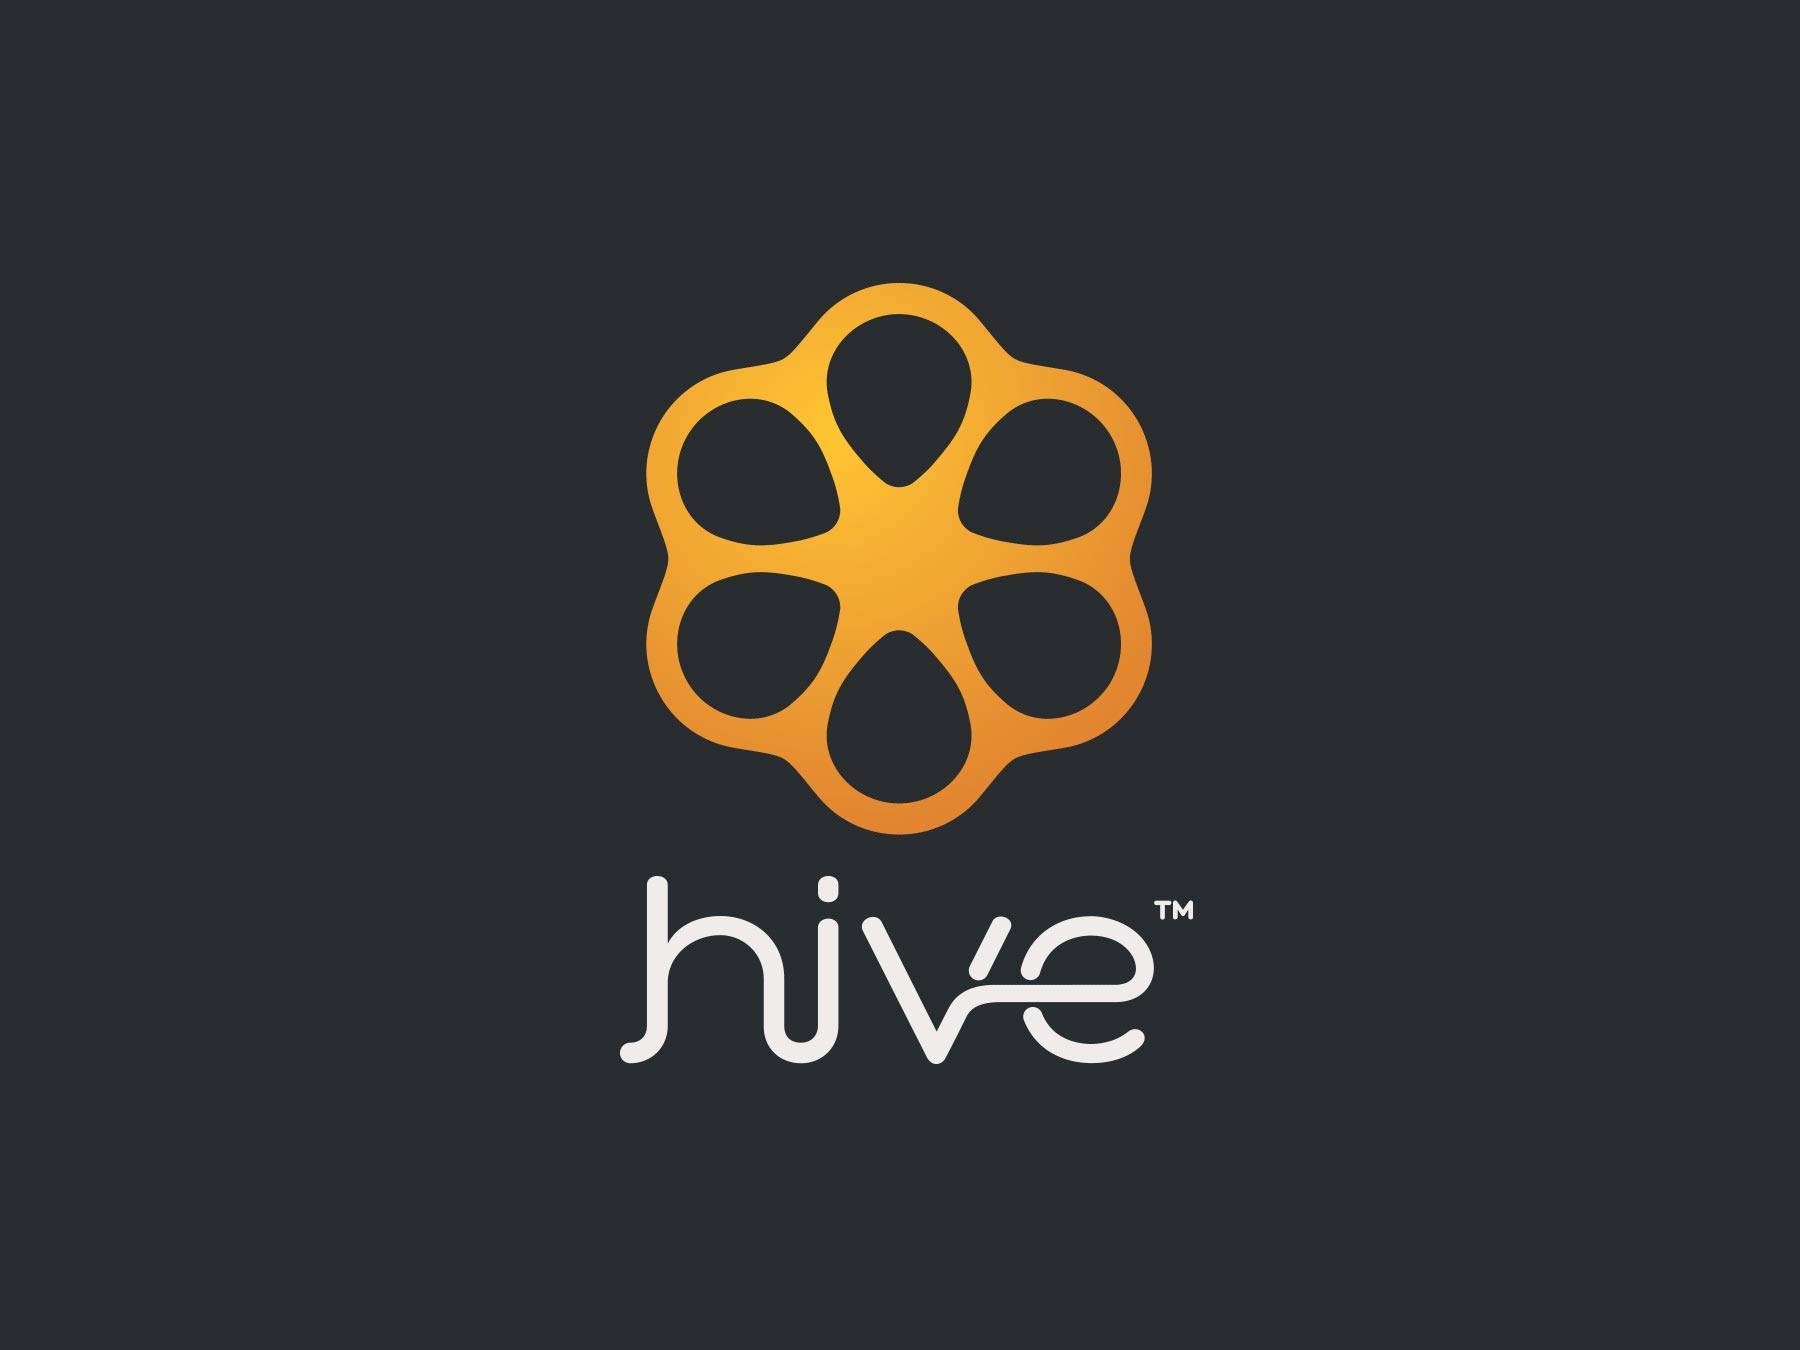 Hive. The Hive лого. Apache Hive logo. BNB Hive логотип. Стильные логотипы улей.